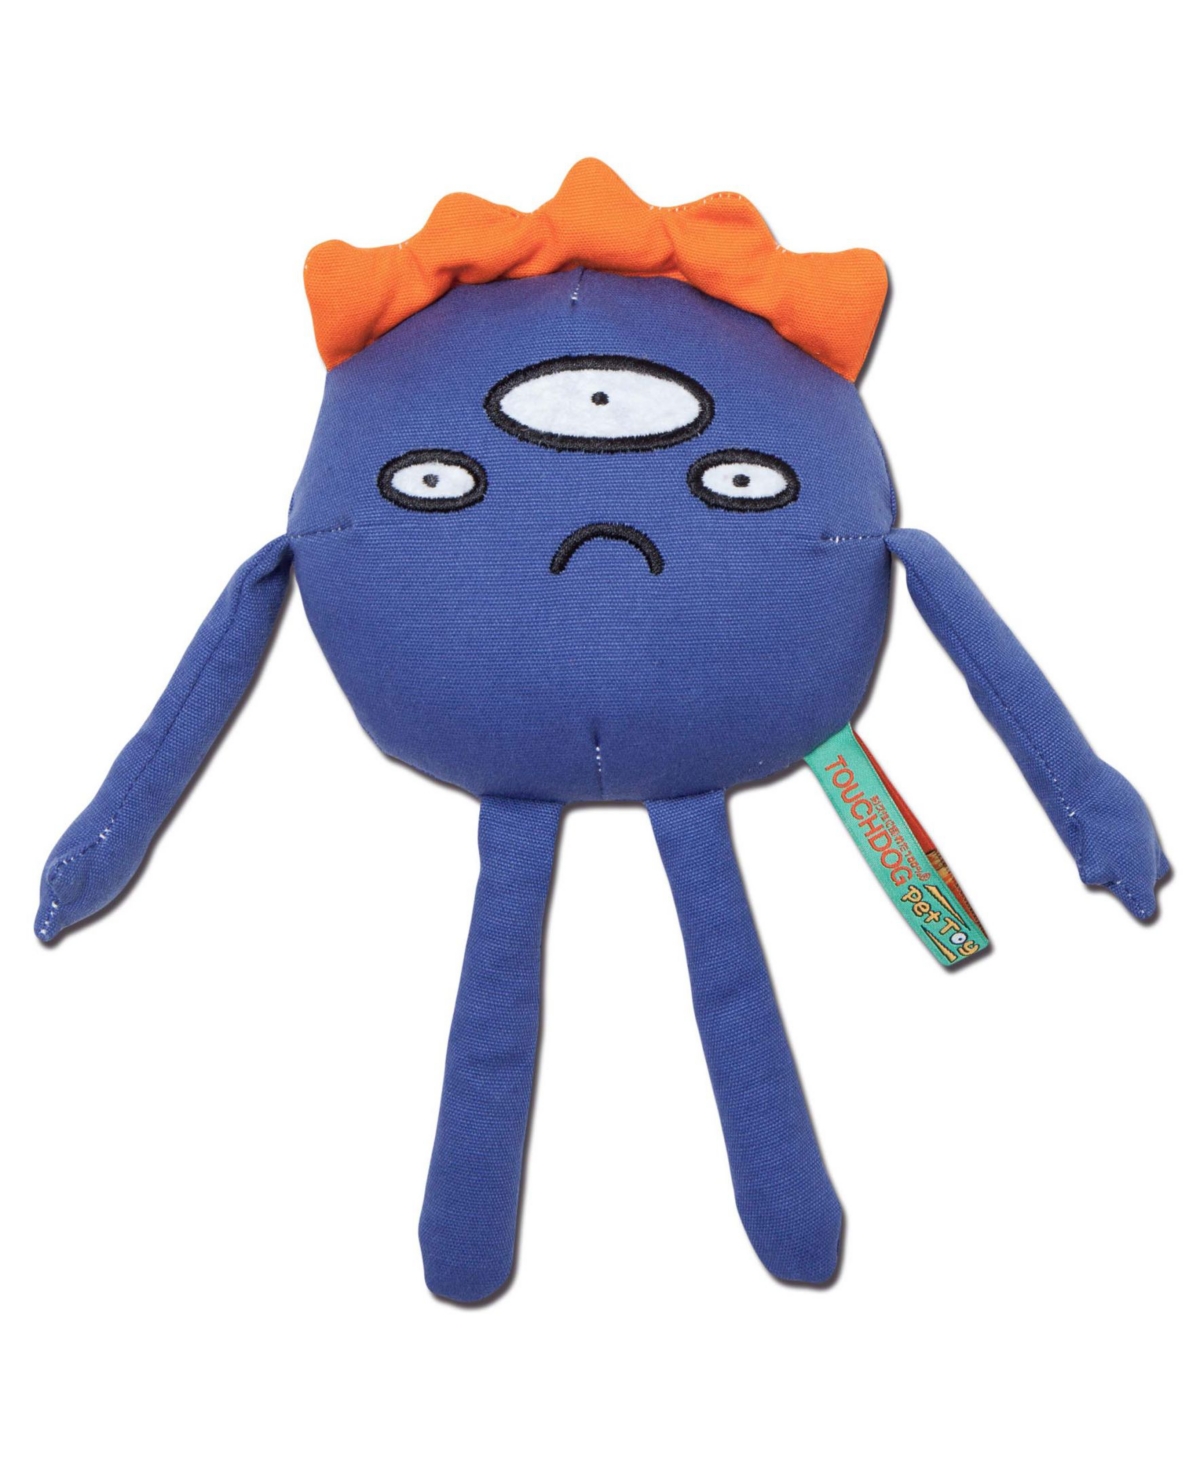 Cartoon Alien Monster Plush Dog Toy - Blue